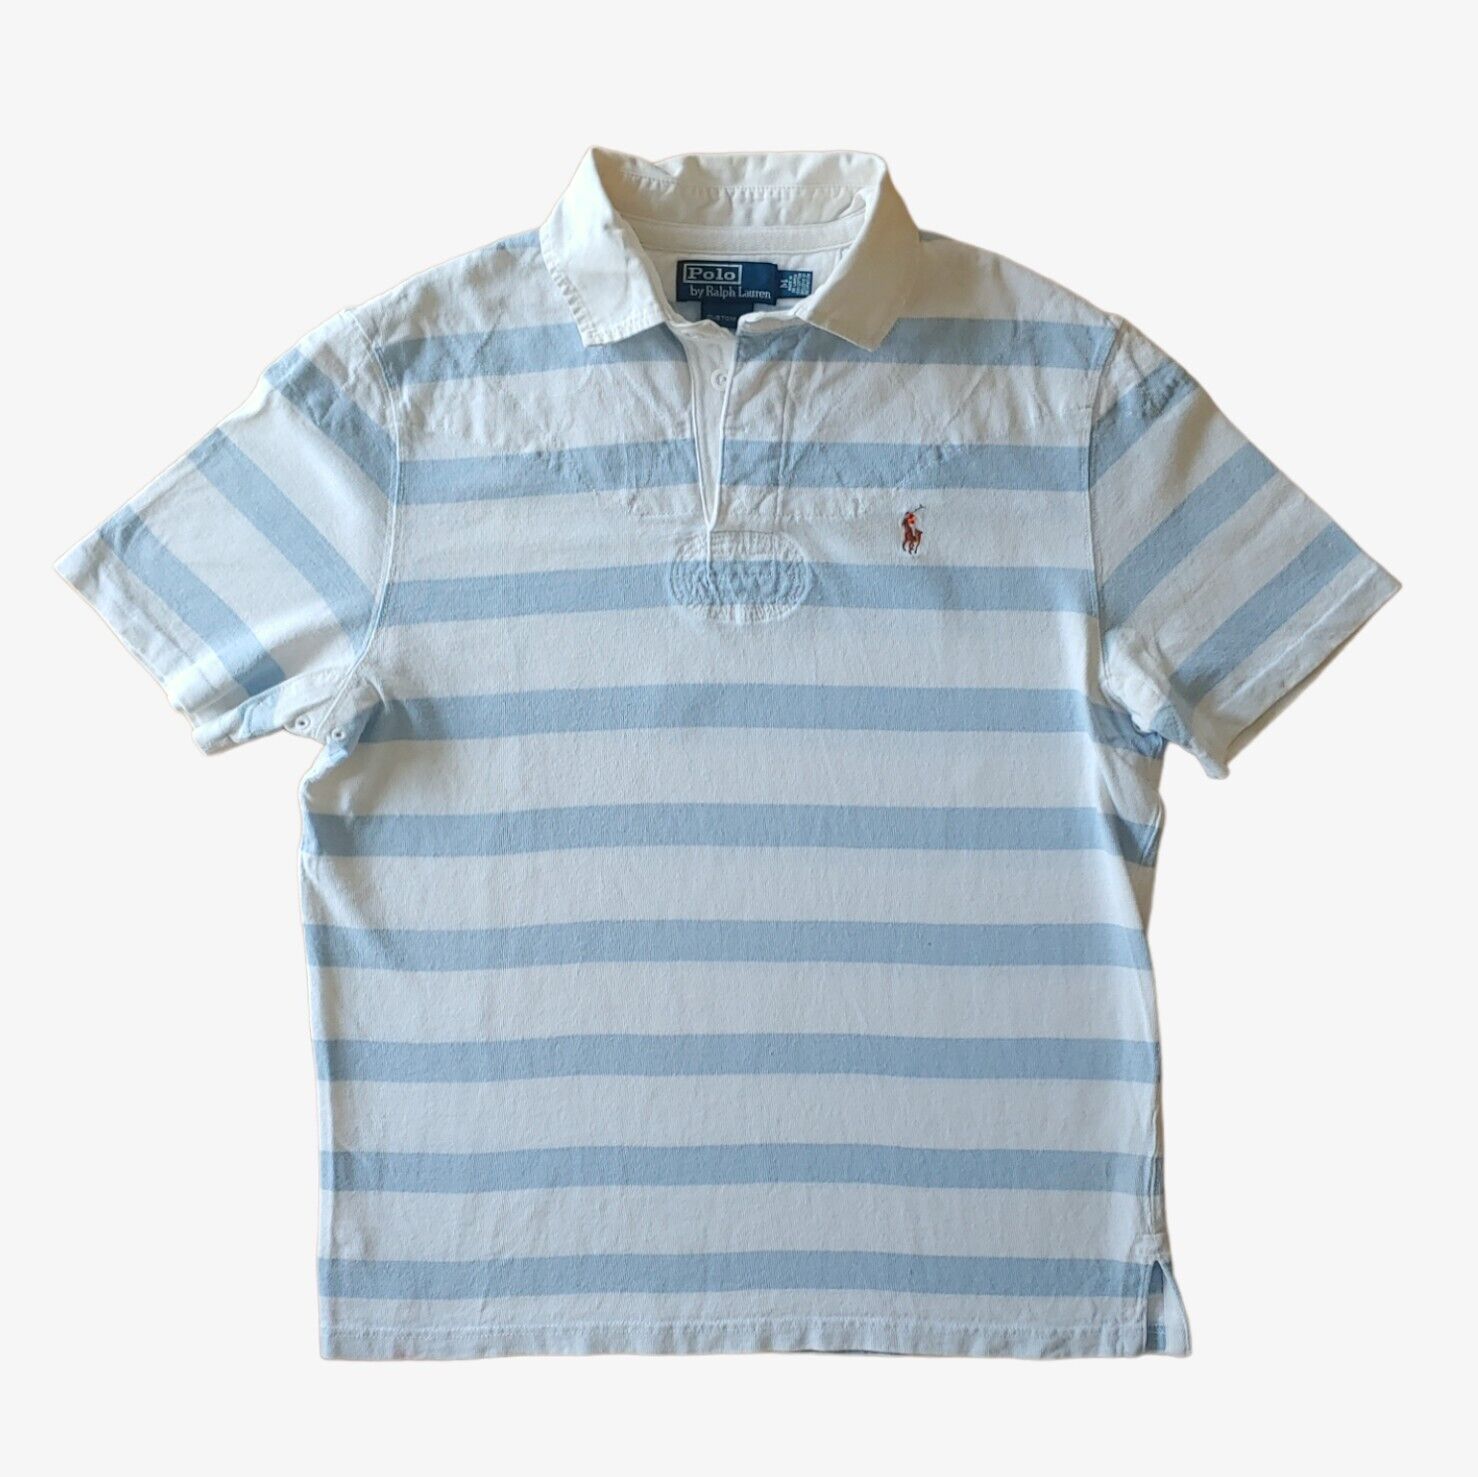 Vintage 90s Polo Ralph Lauren Striped Short Sleeve Rugby Shirt - Casspios Dream